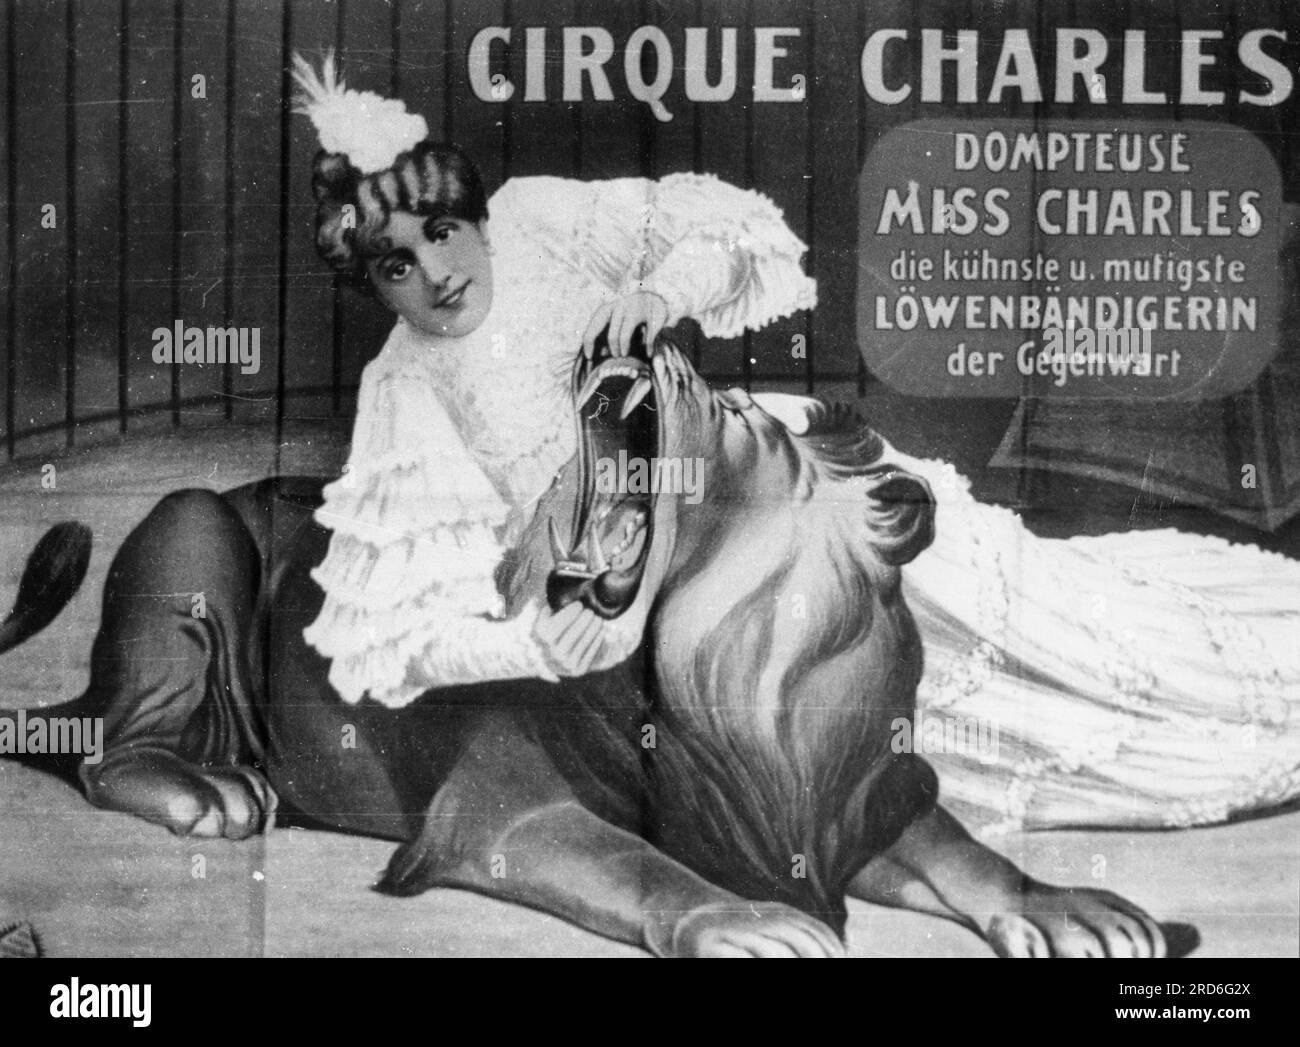 Circus, Cirque Charles, Tamer Ida Krone alias Miss Charles, affiche publicitaire, circa 1910, INFORMATION-AUTORISATION-DROITS-SUPPLÉMENTAIRES-NON-DISPONIBLE Banque D'Images